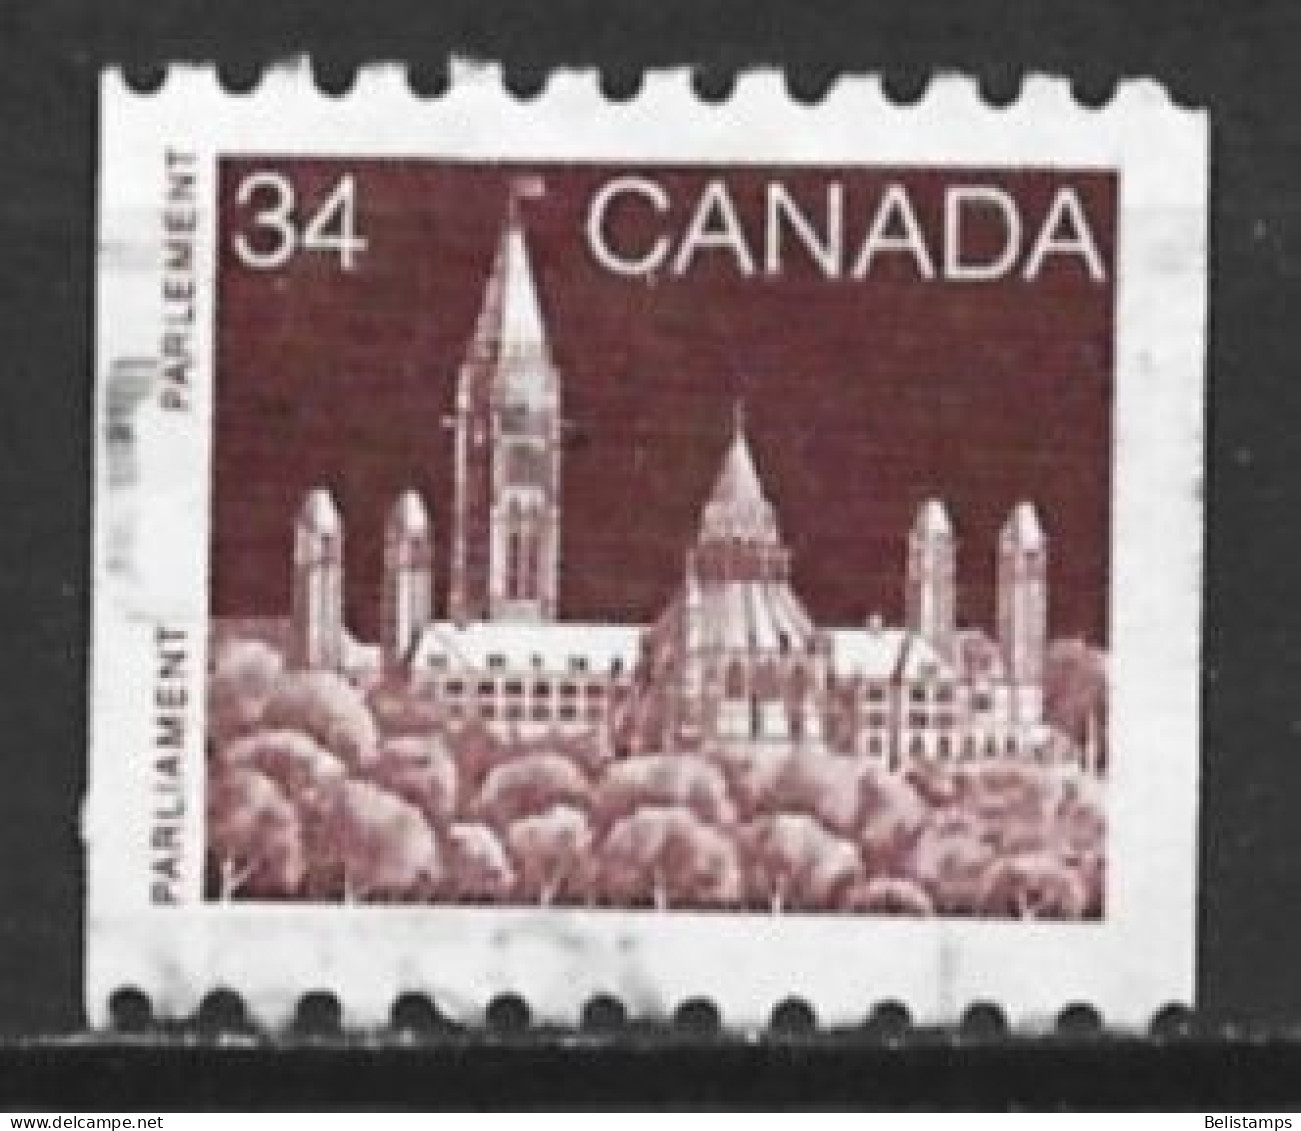 Canada 1985. Scott #952 (U) Parliament (Library)  *Complete Issue* - Markenrollen